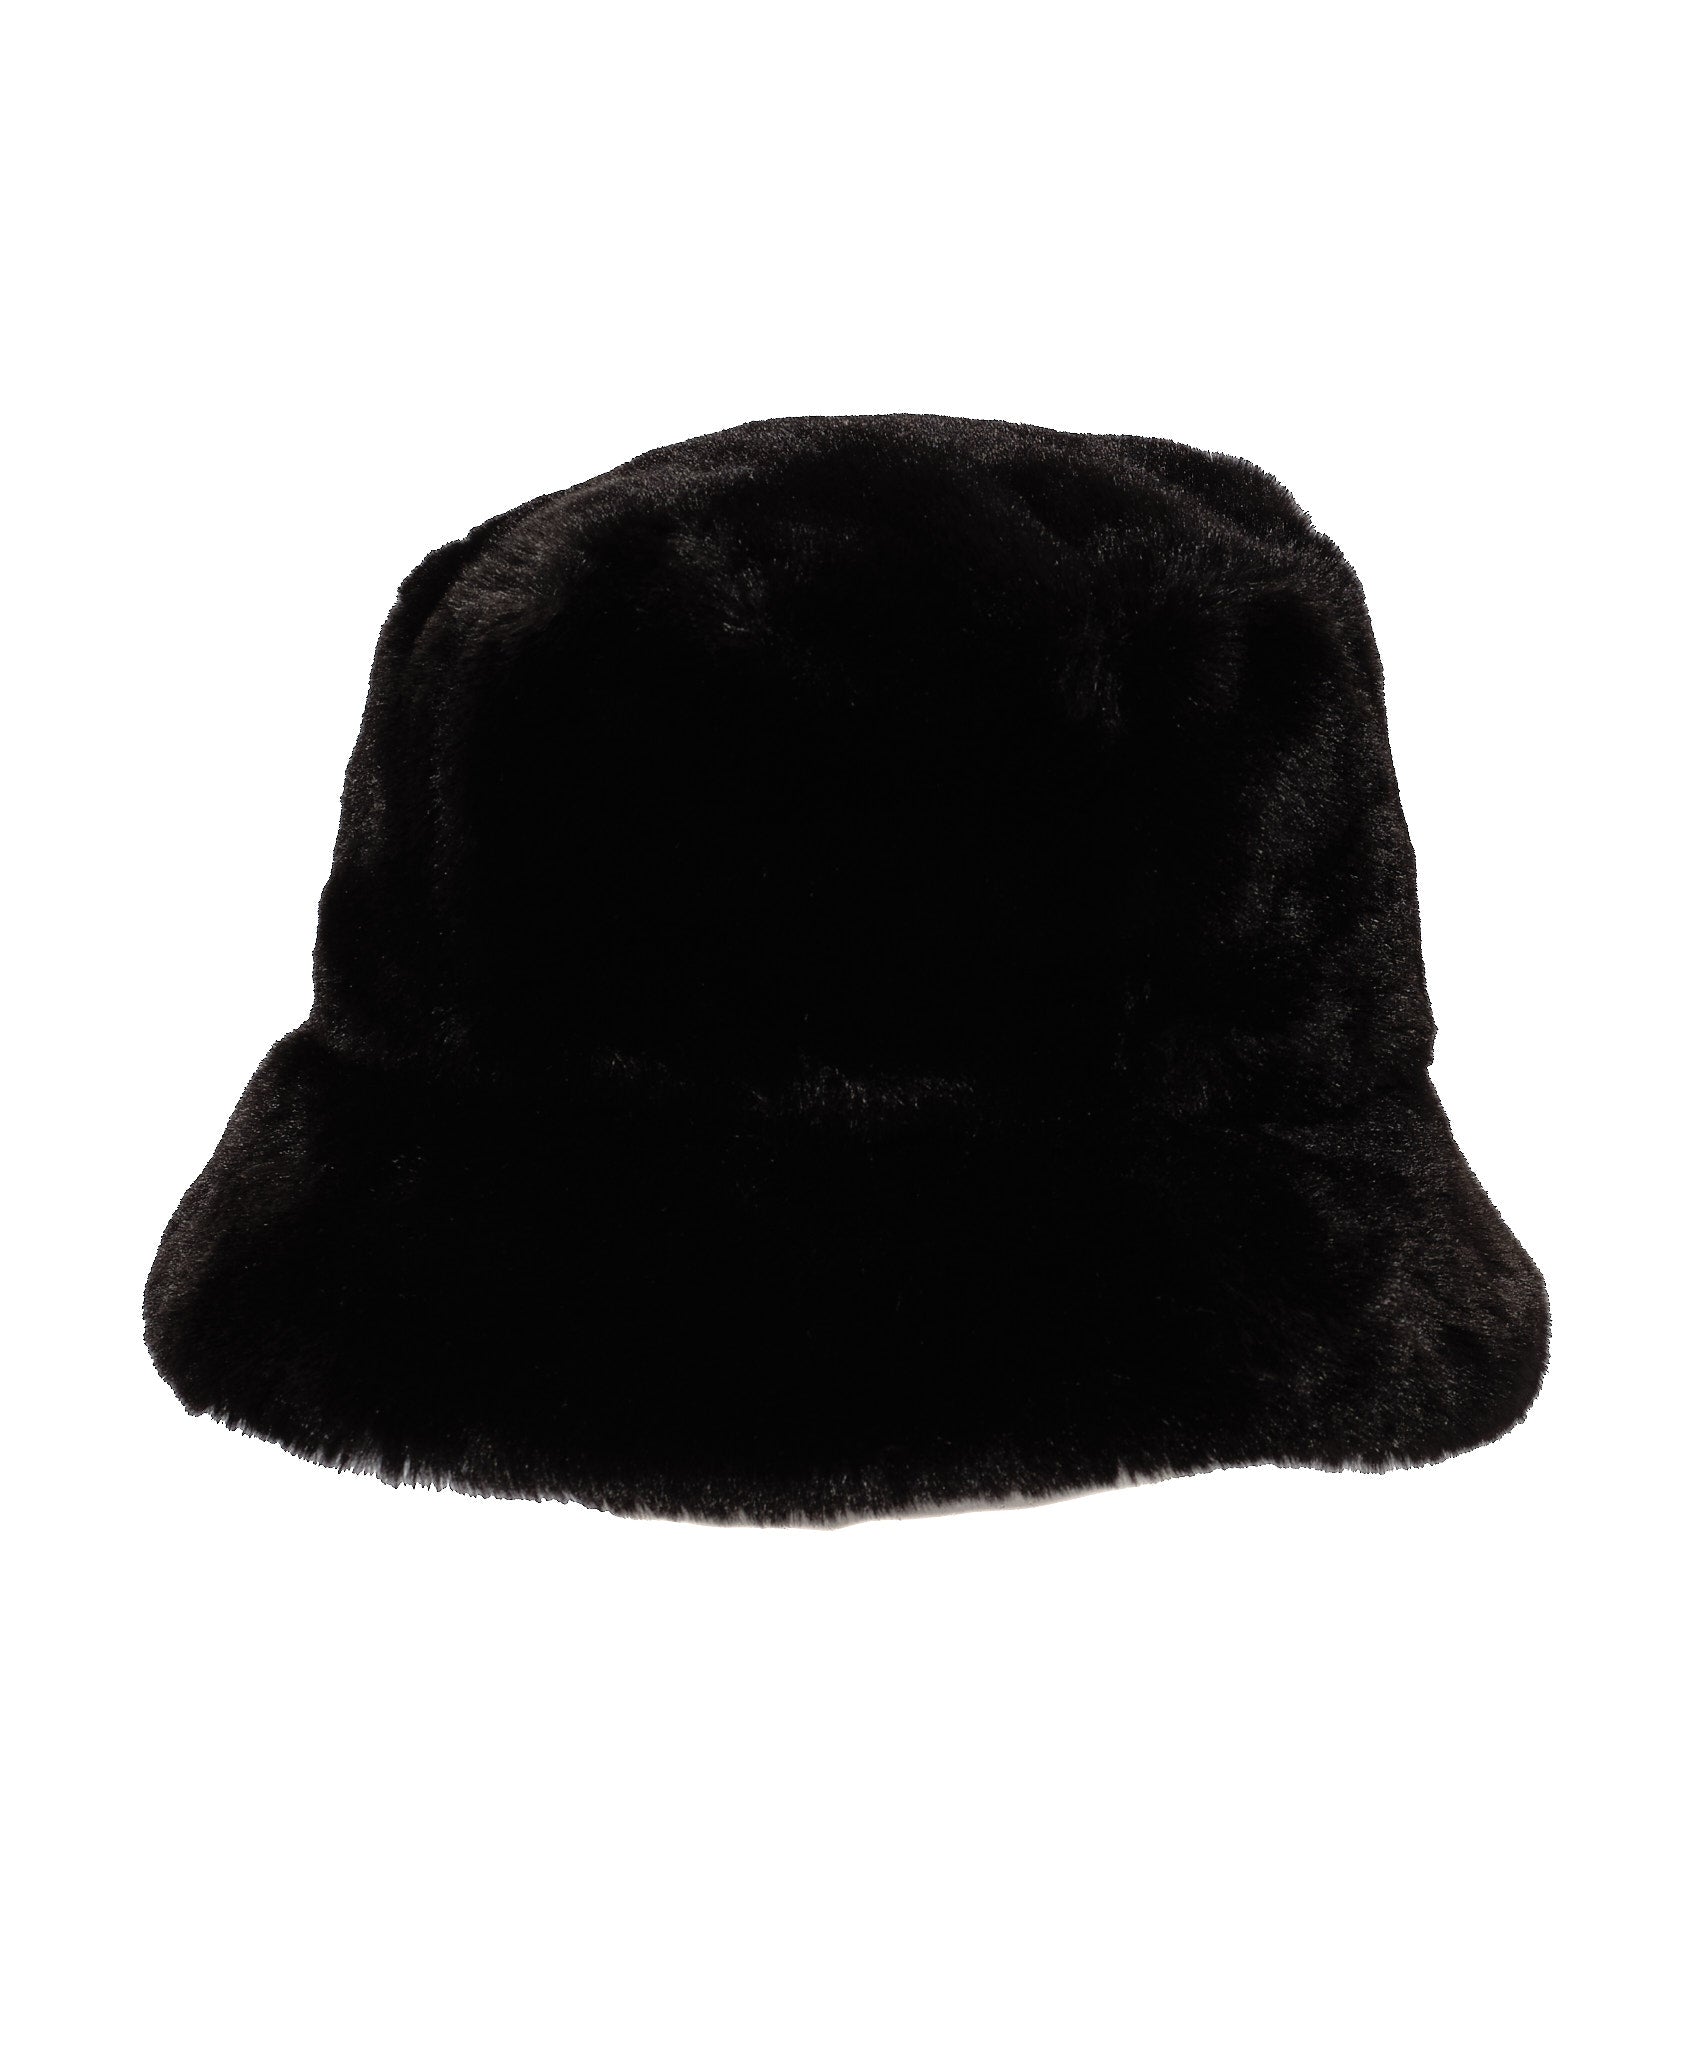 Reversible Bucket Hat in color Cream/Black